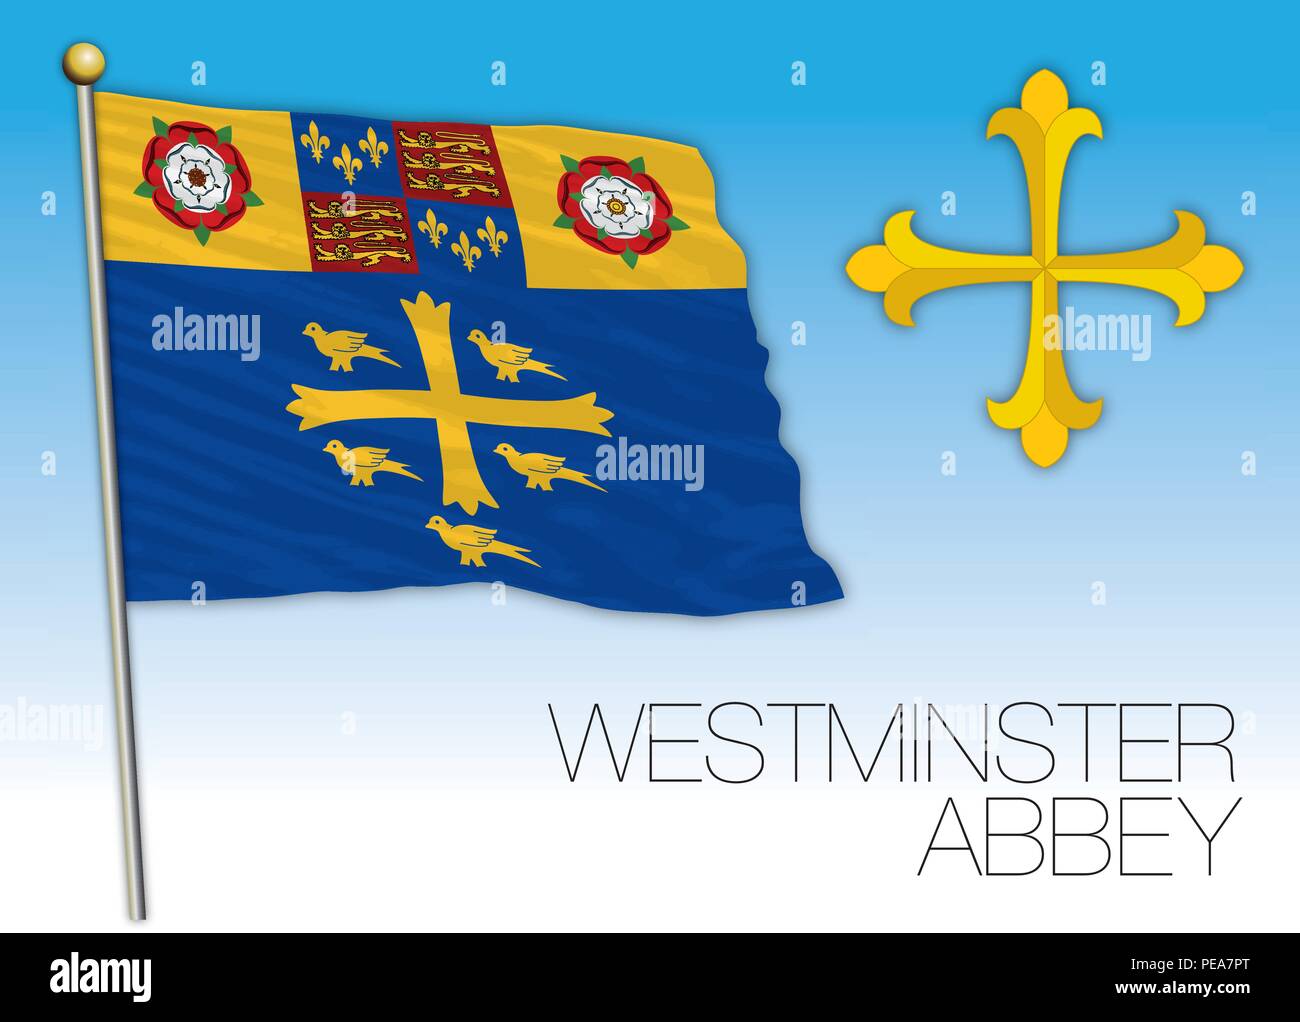 Westminster Abbey flag, United Kingdom, vector illustration Stock Vector